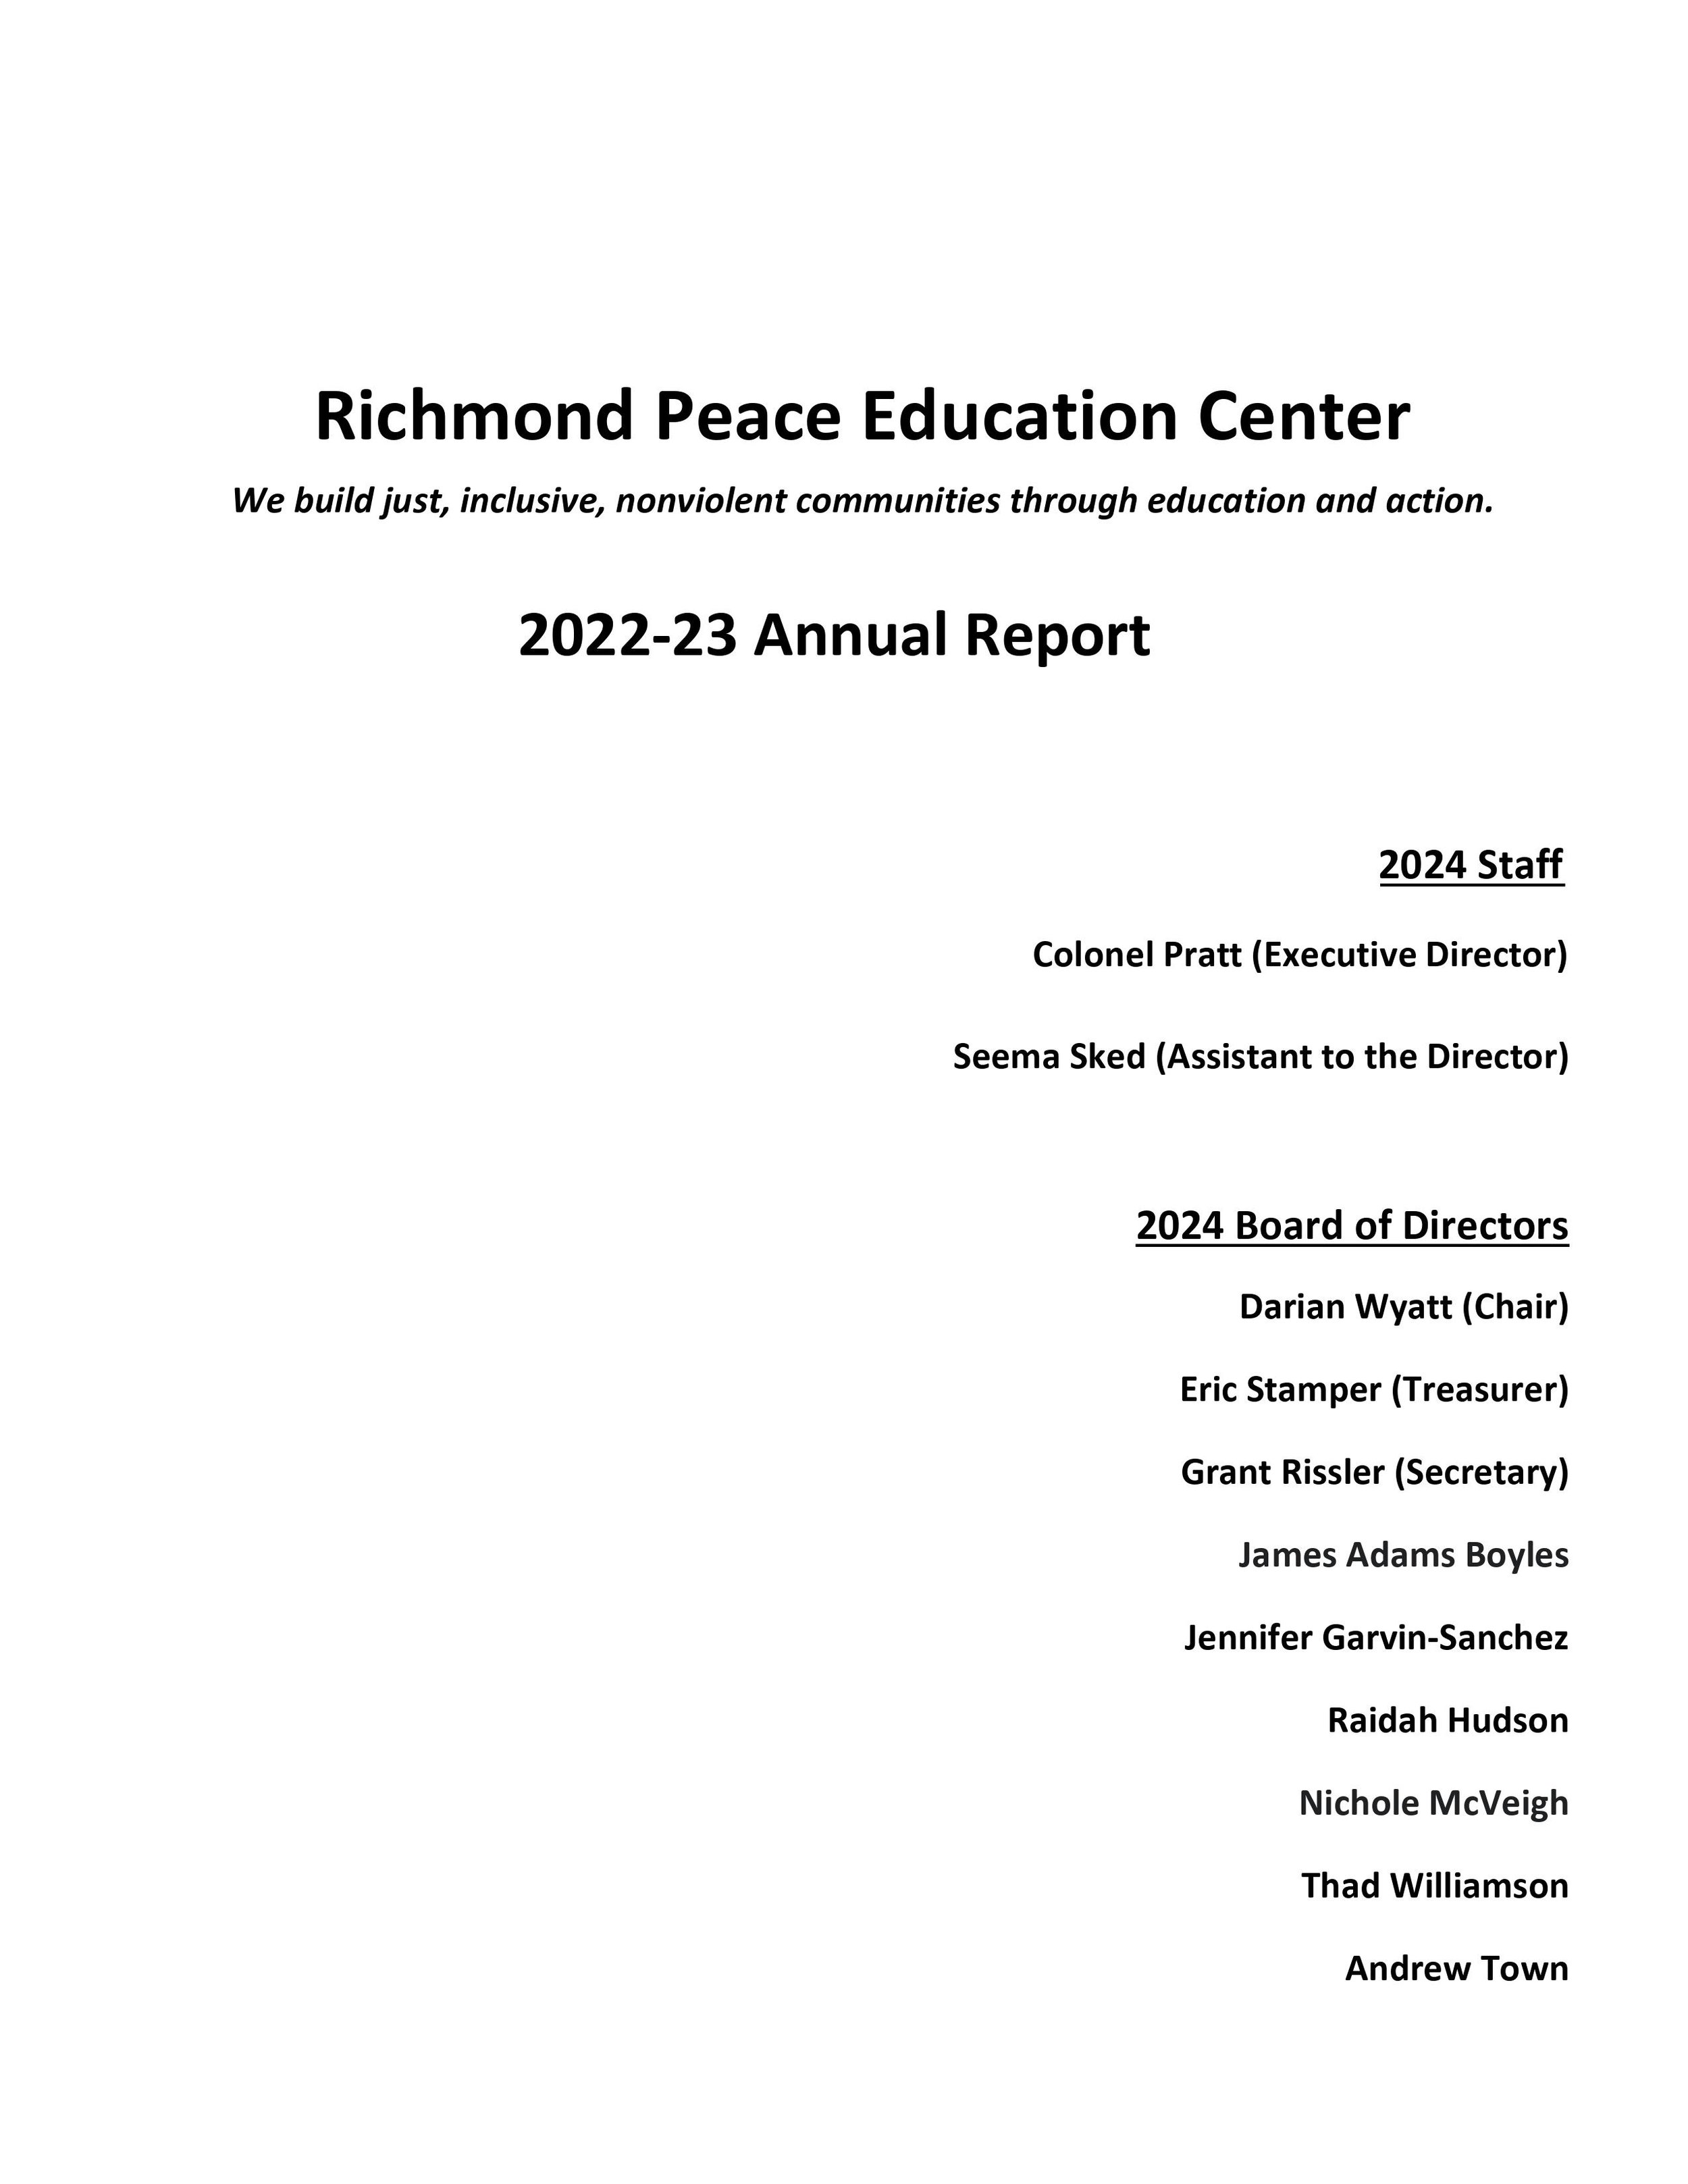 Annual Report - 2022-23 p1.jpg